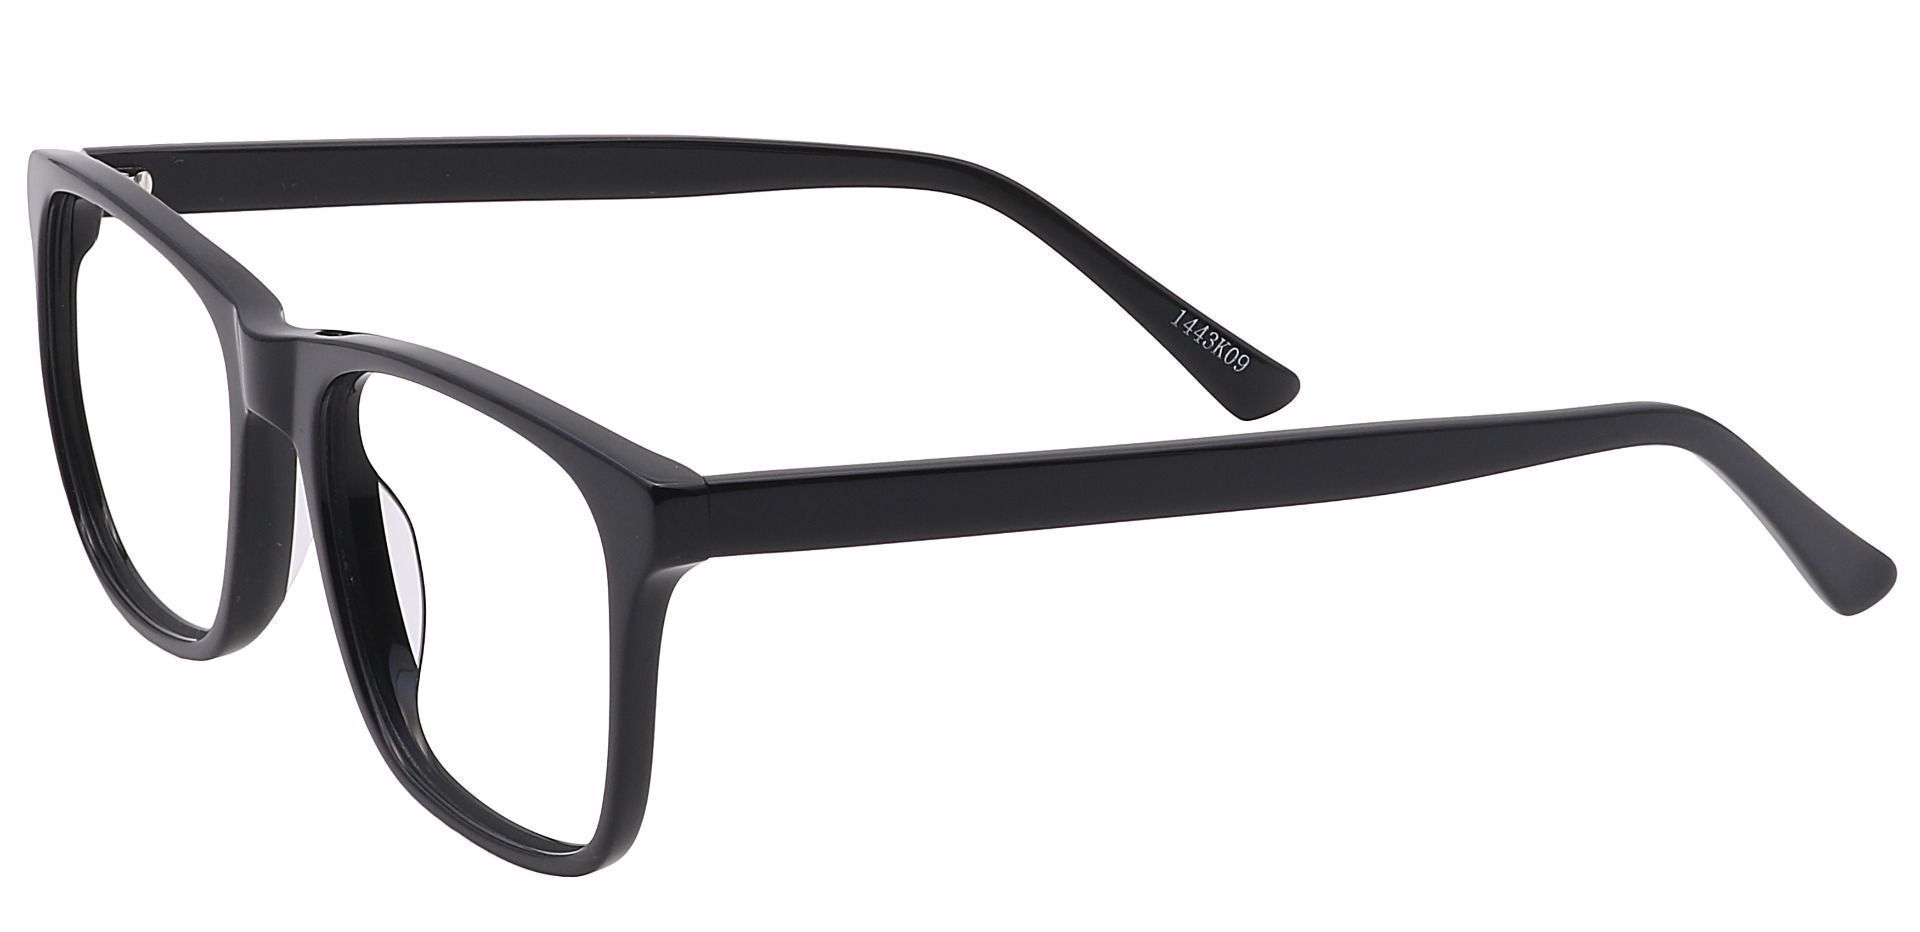 Cantina Square Progressive Glasses - Black